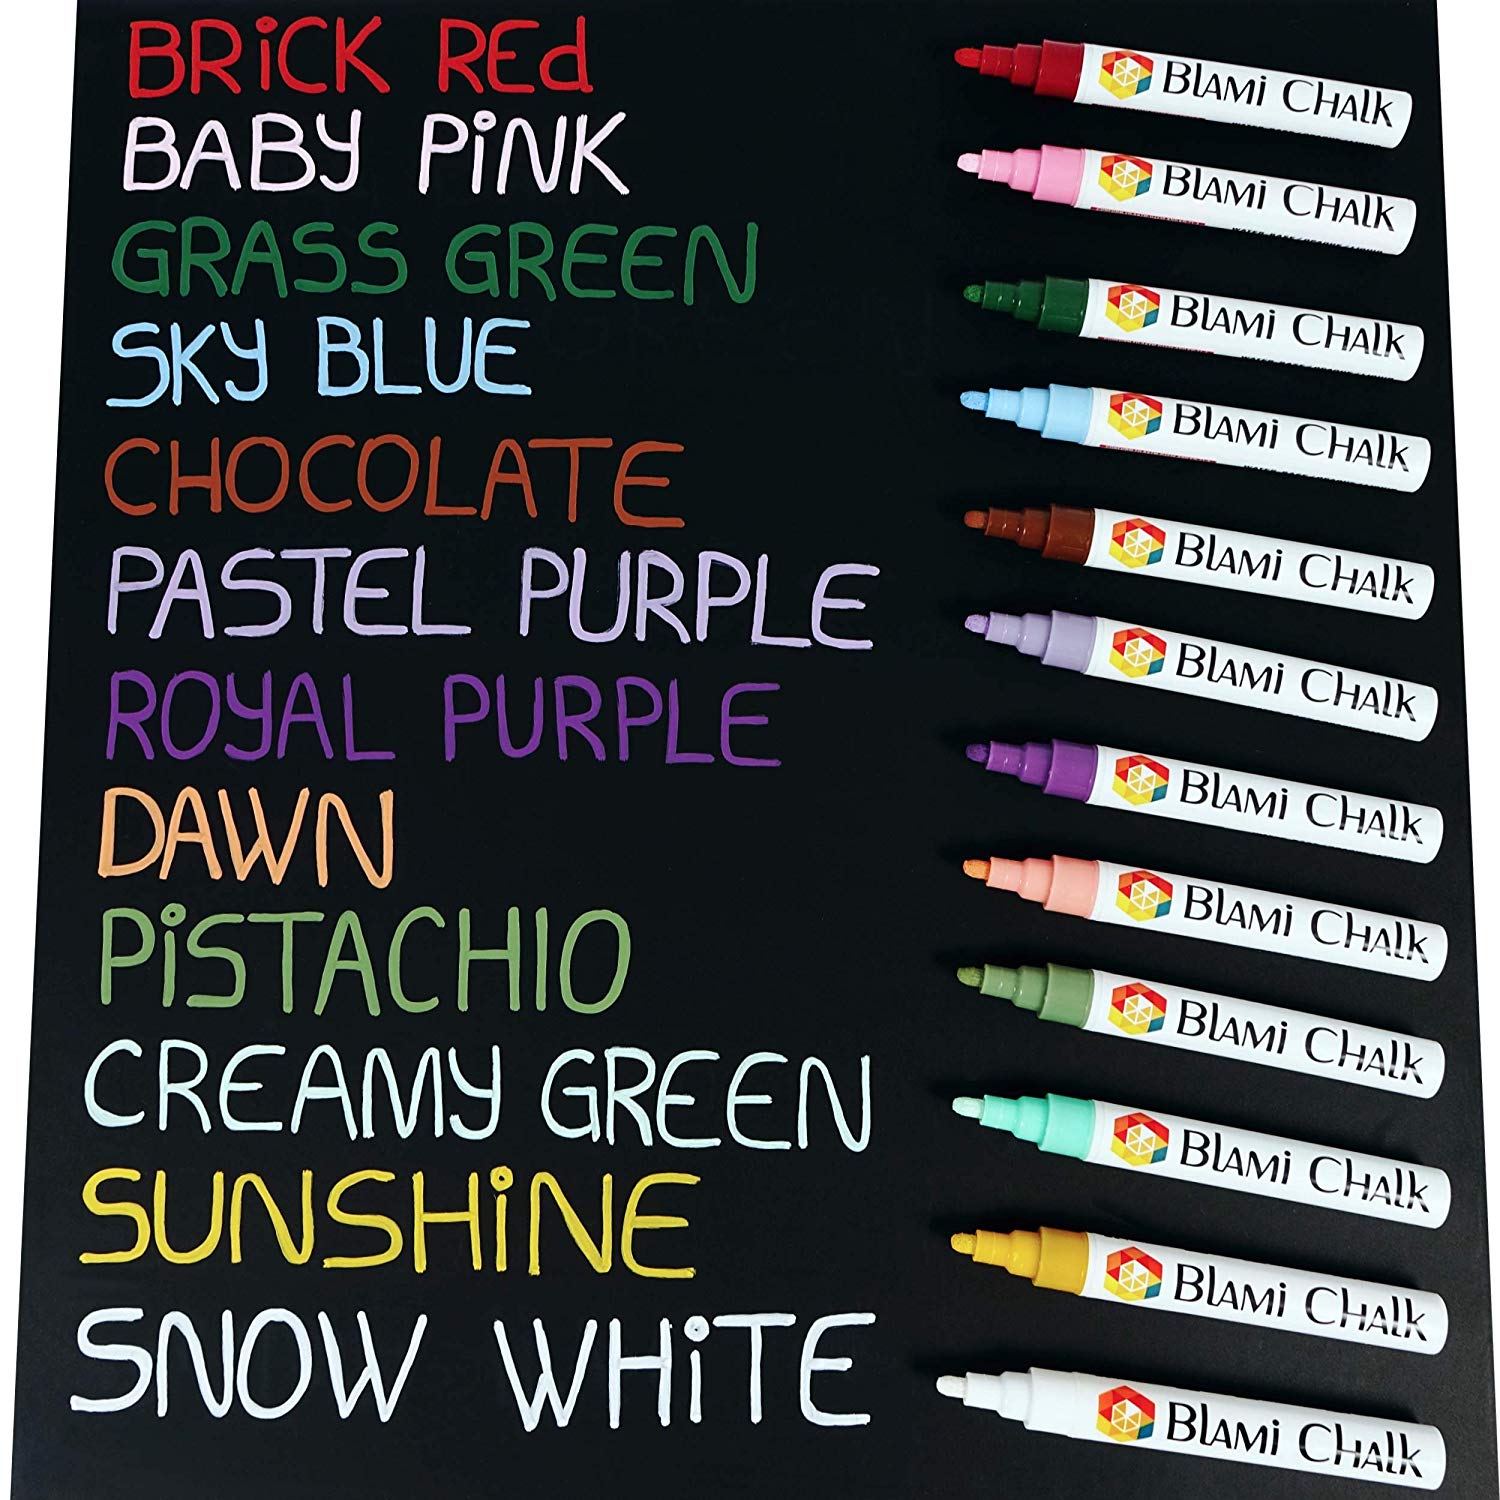 Emooqi 12 colors Liquid Chalk Markers 2&6mm